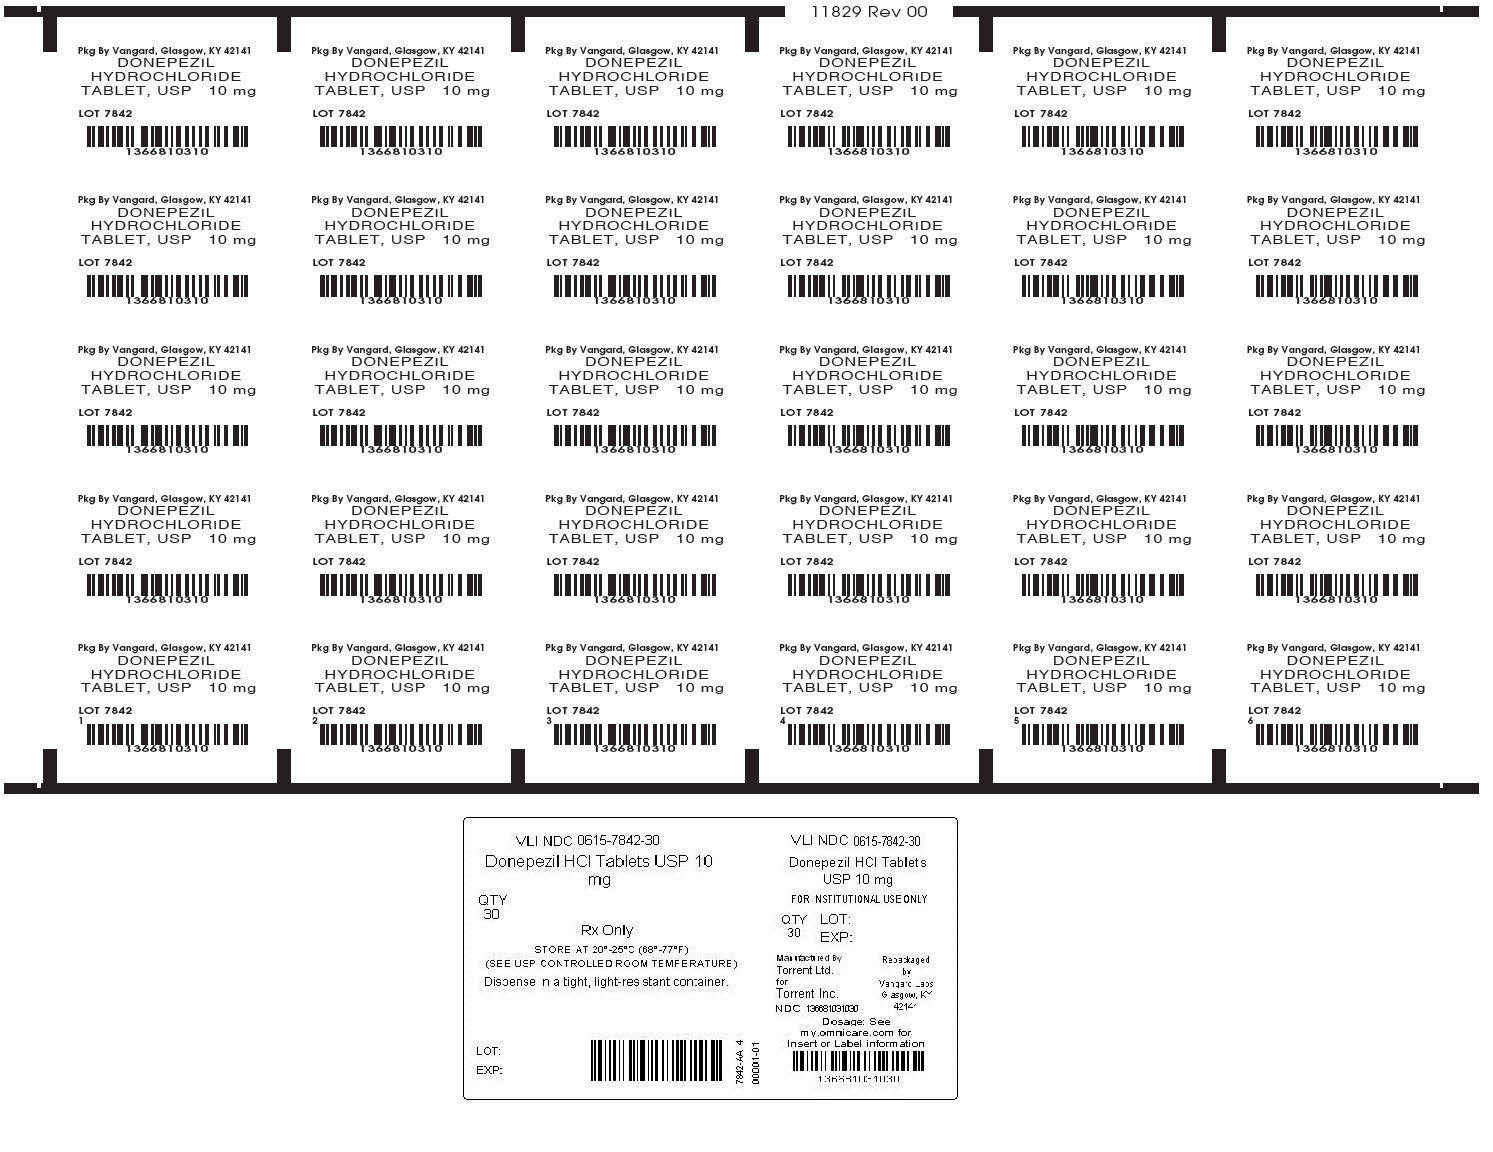 Donepezil Hydrochloride Tablet, USP 10mg unit-dose label